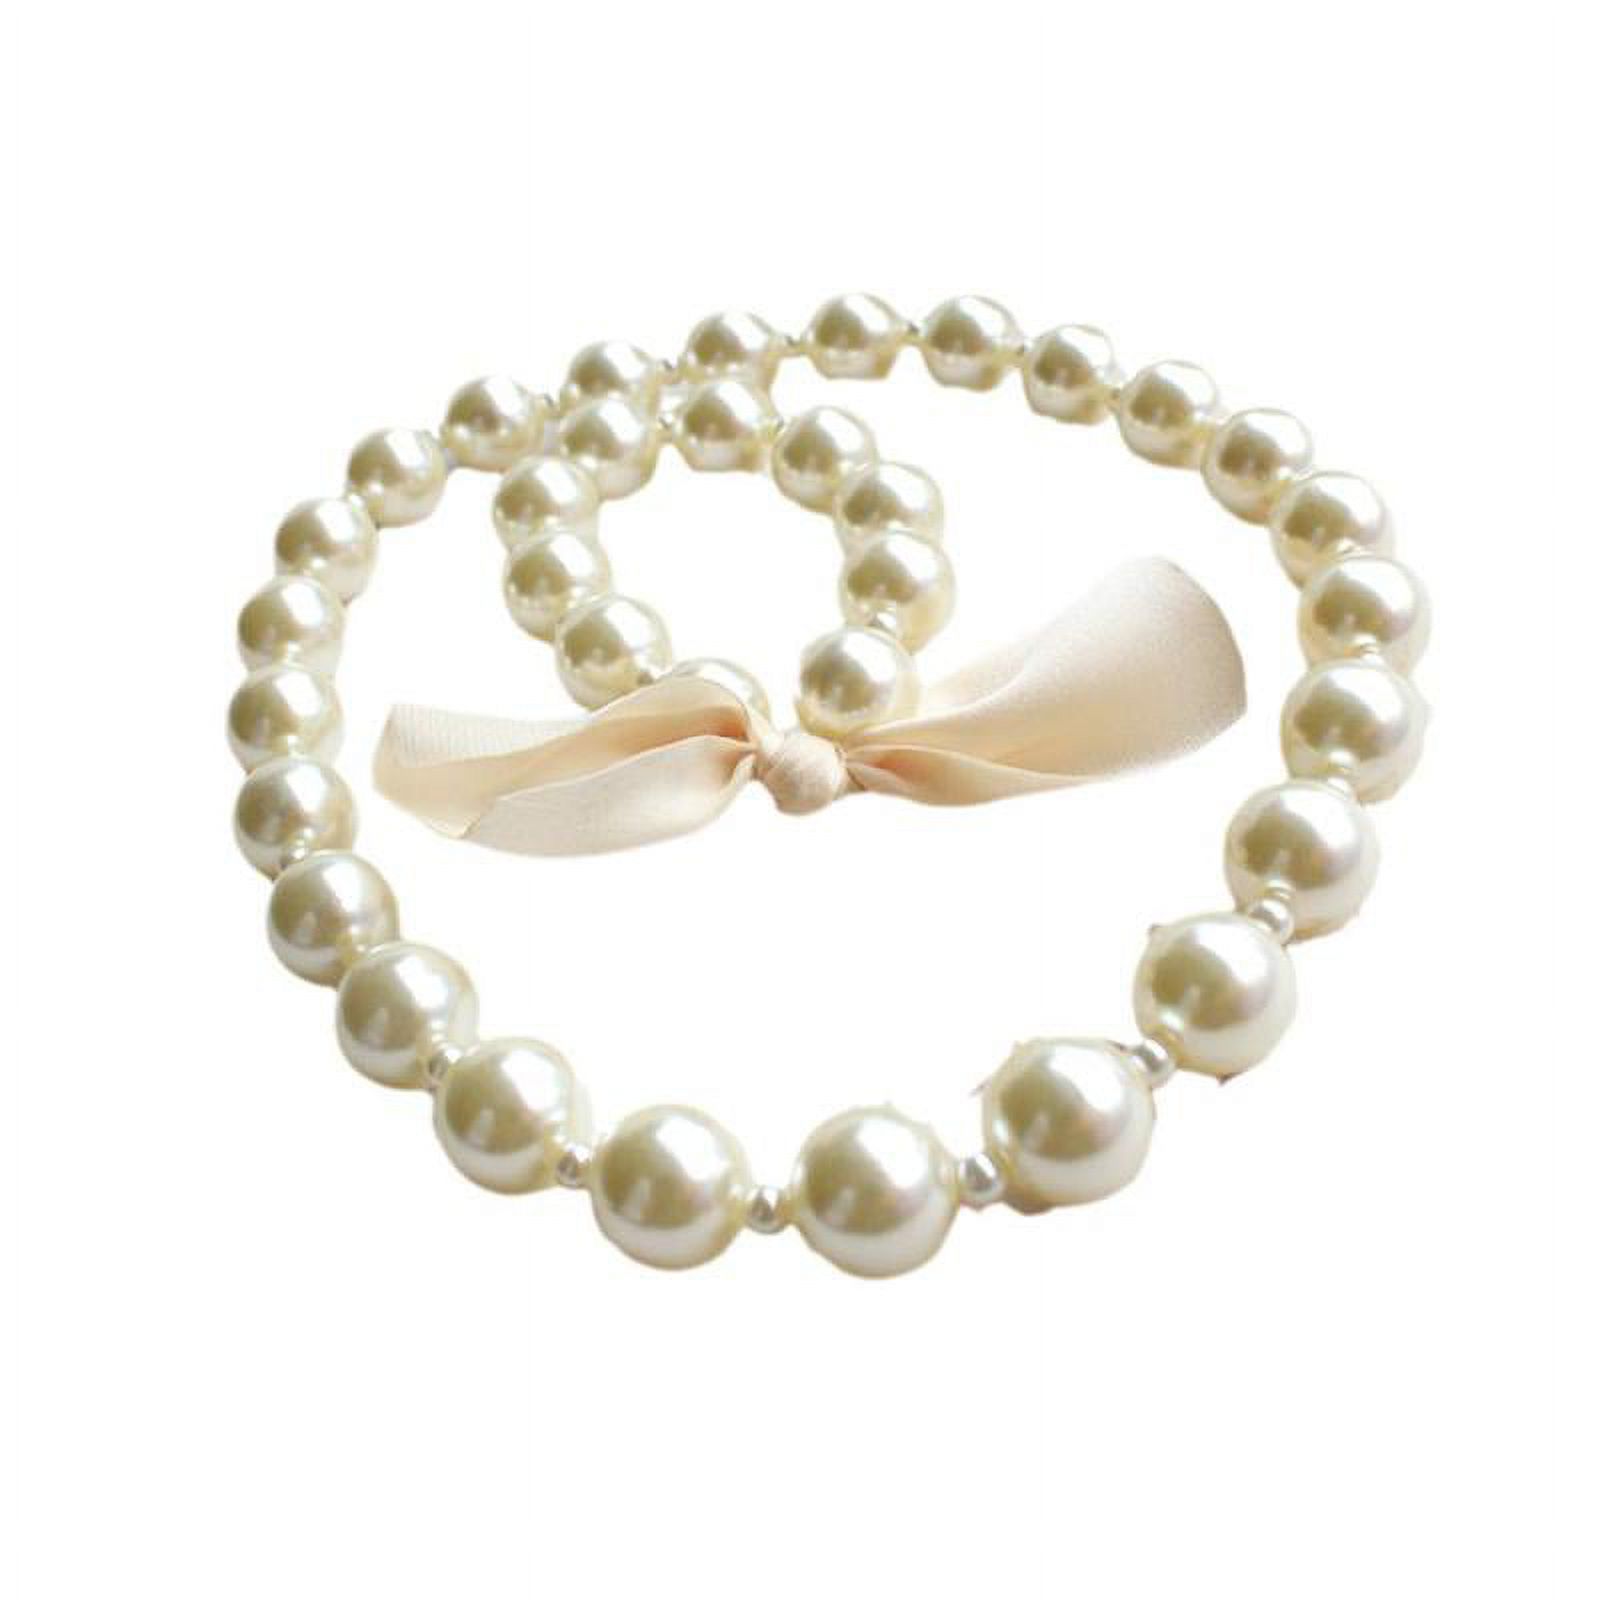 Children's Girls Faux Pearl Necklace Bracelet Earrings Set Gift NEW Jewelry K3A5 - image 1 of 9